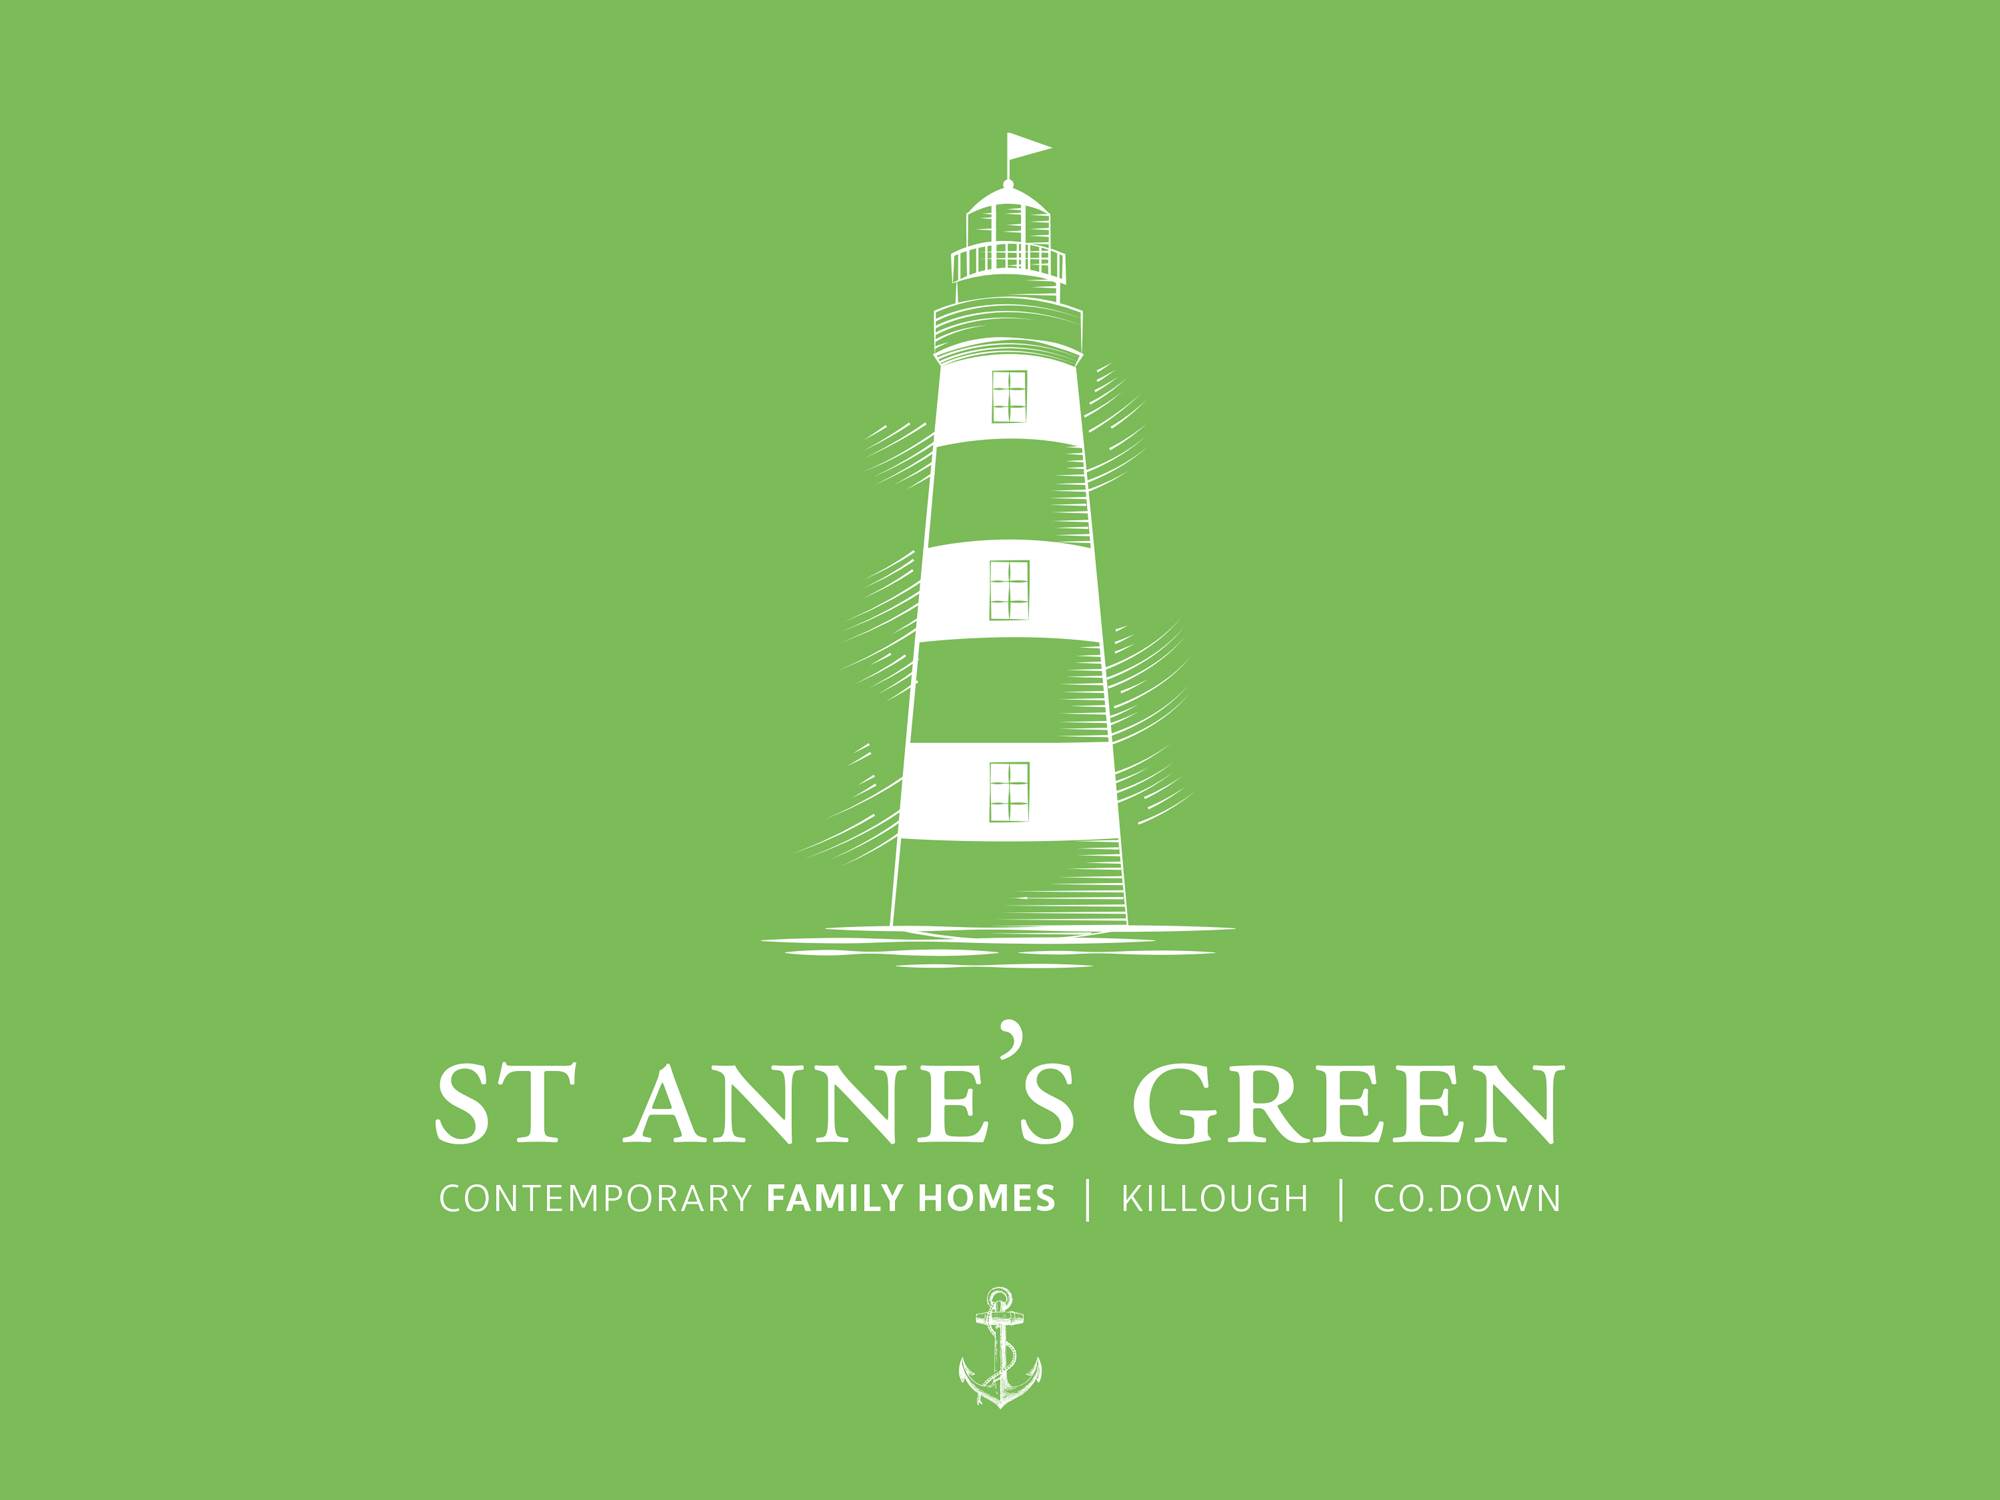 2 St Anne's Green